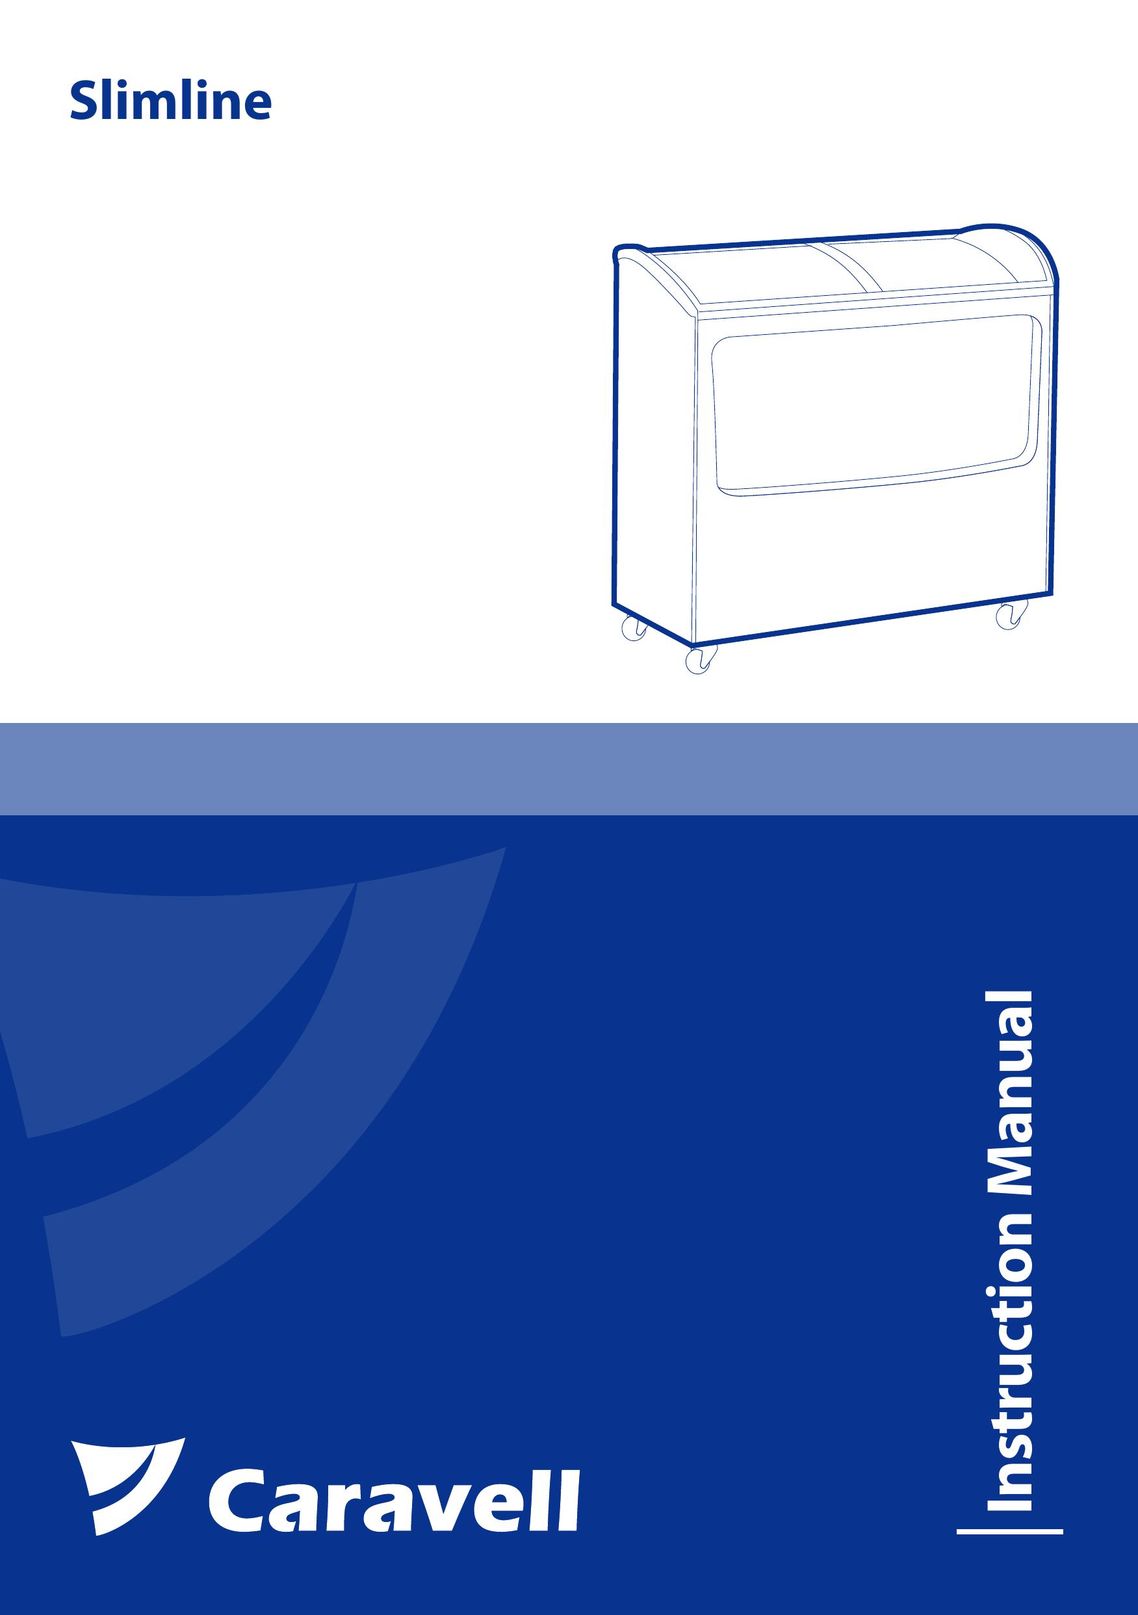 Caravell SLC 168 Freezer User Manual